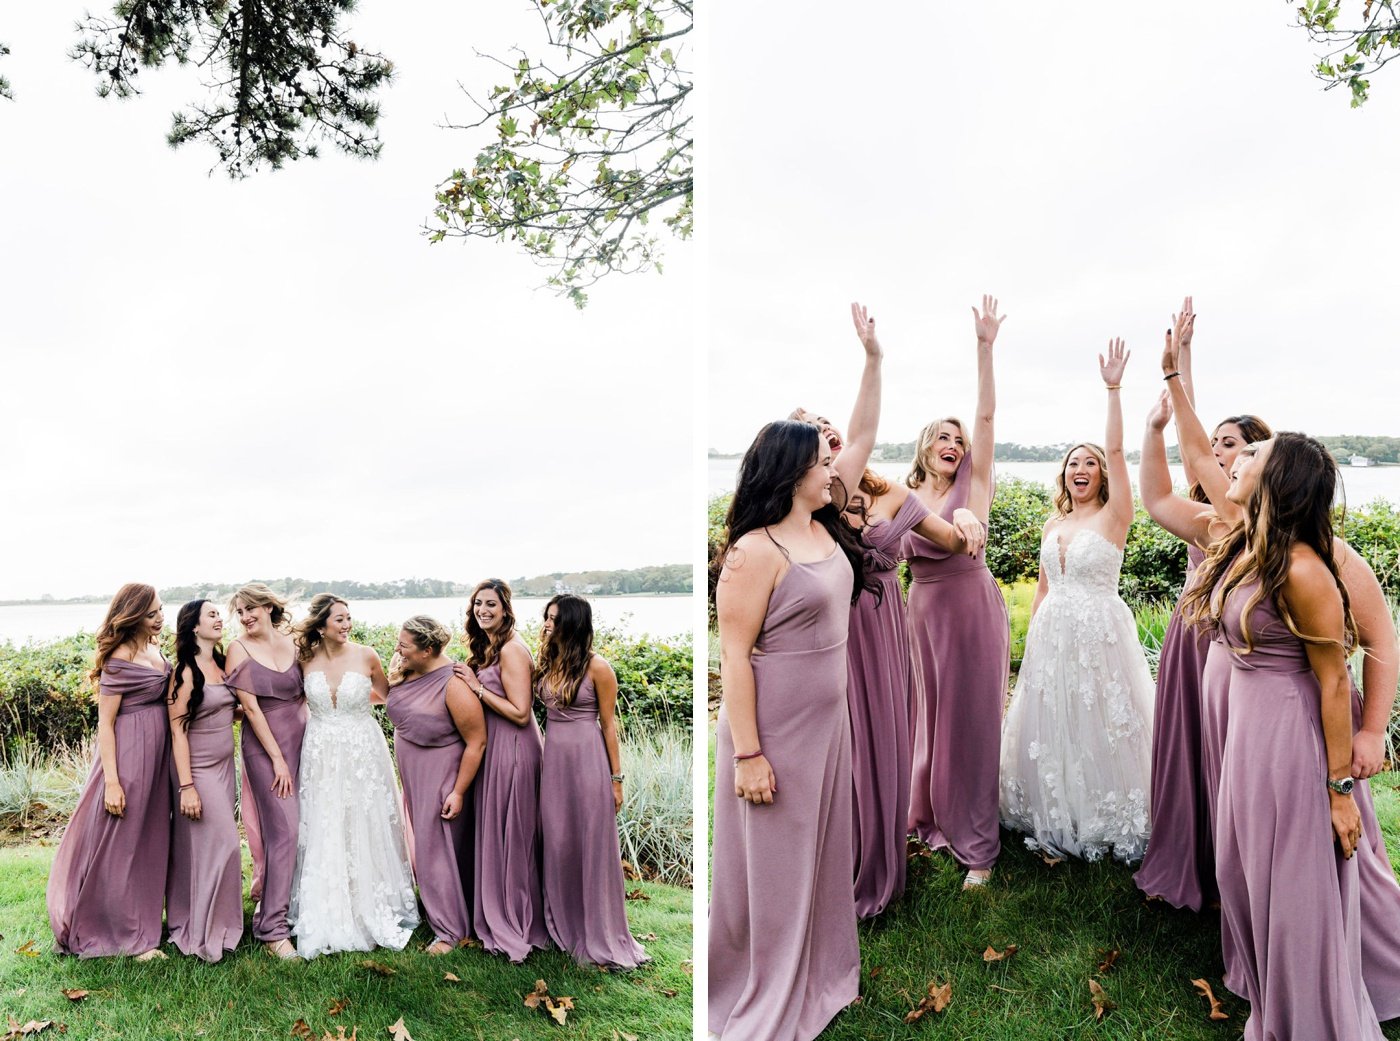 Bridal party portraits at a backyard wedding in Long Island, NY